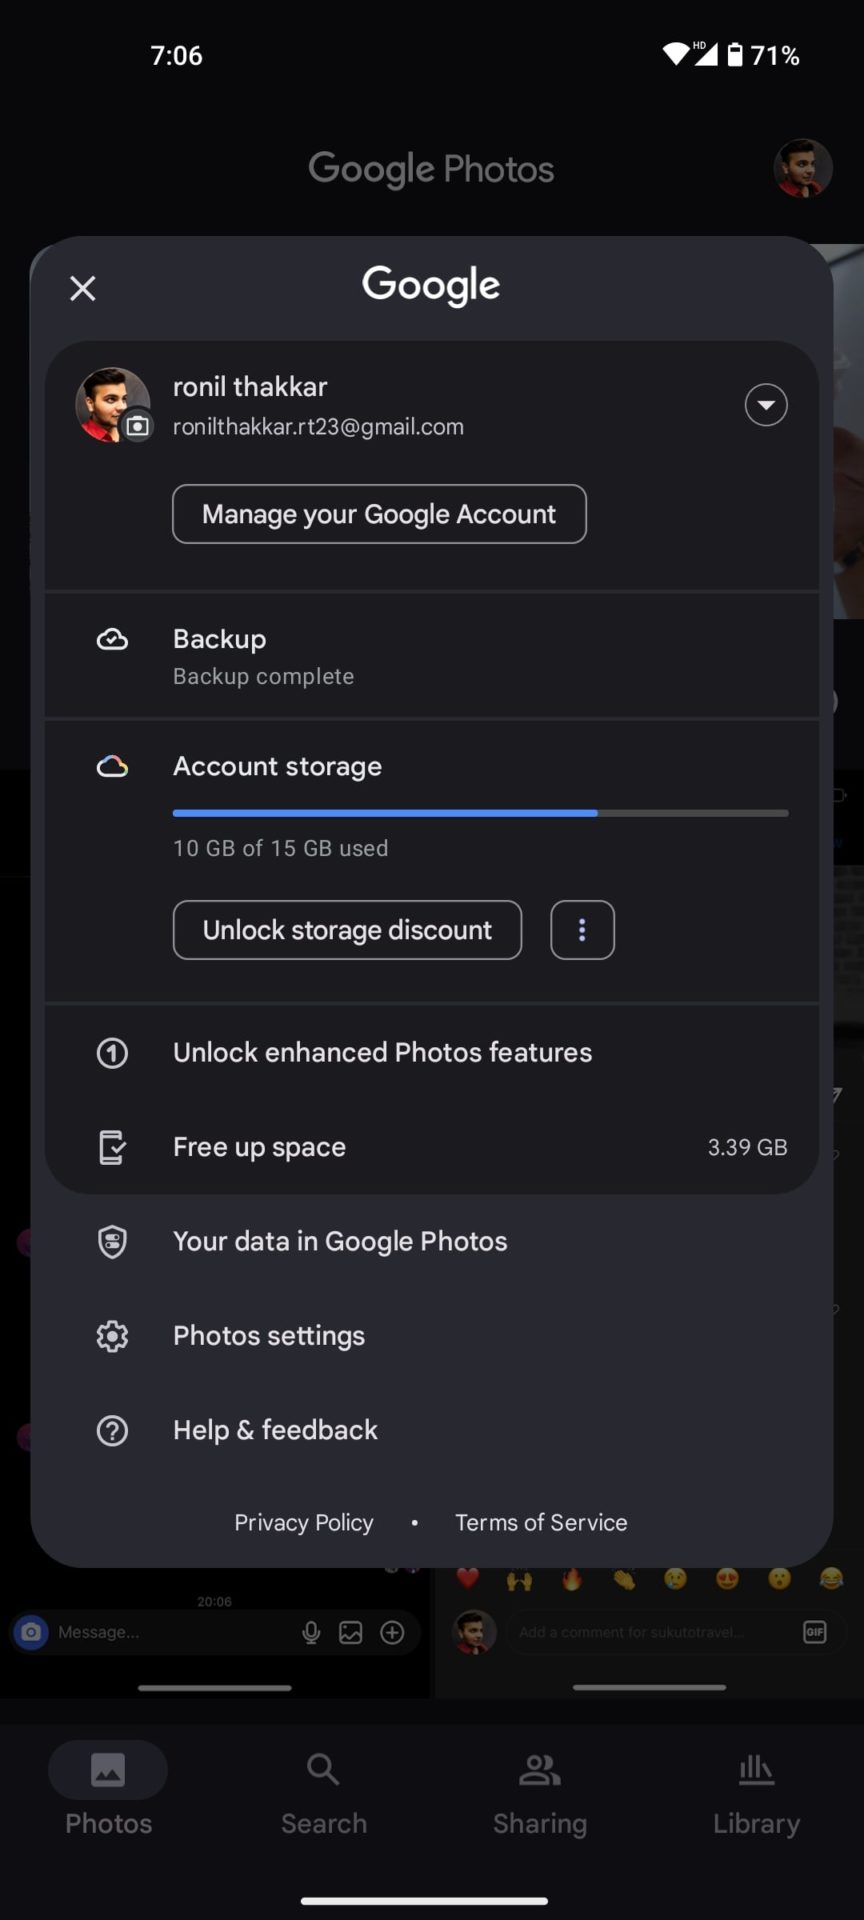 Google Photos Photos settings